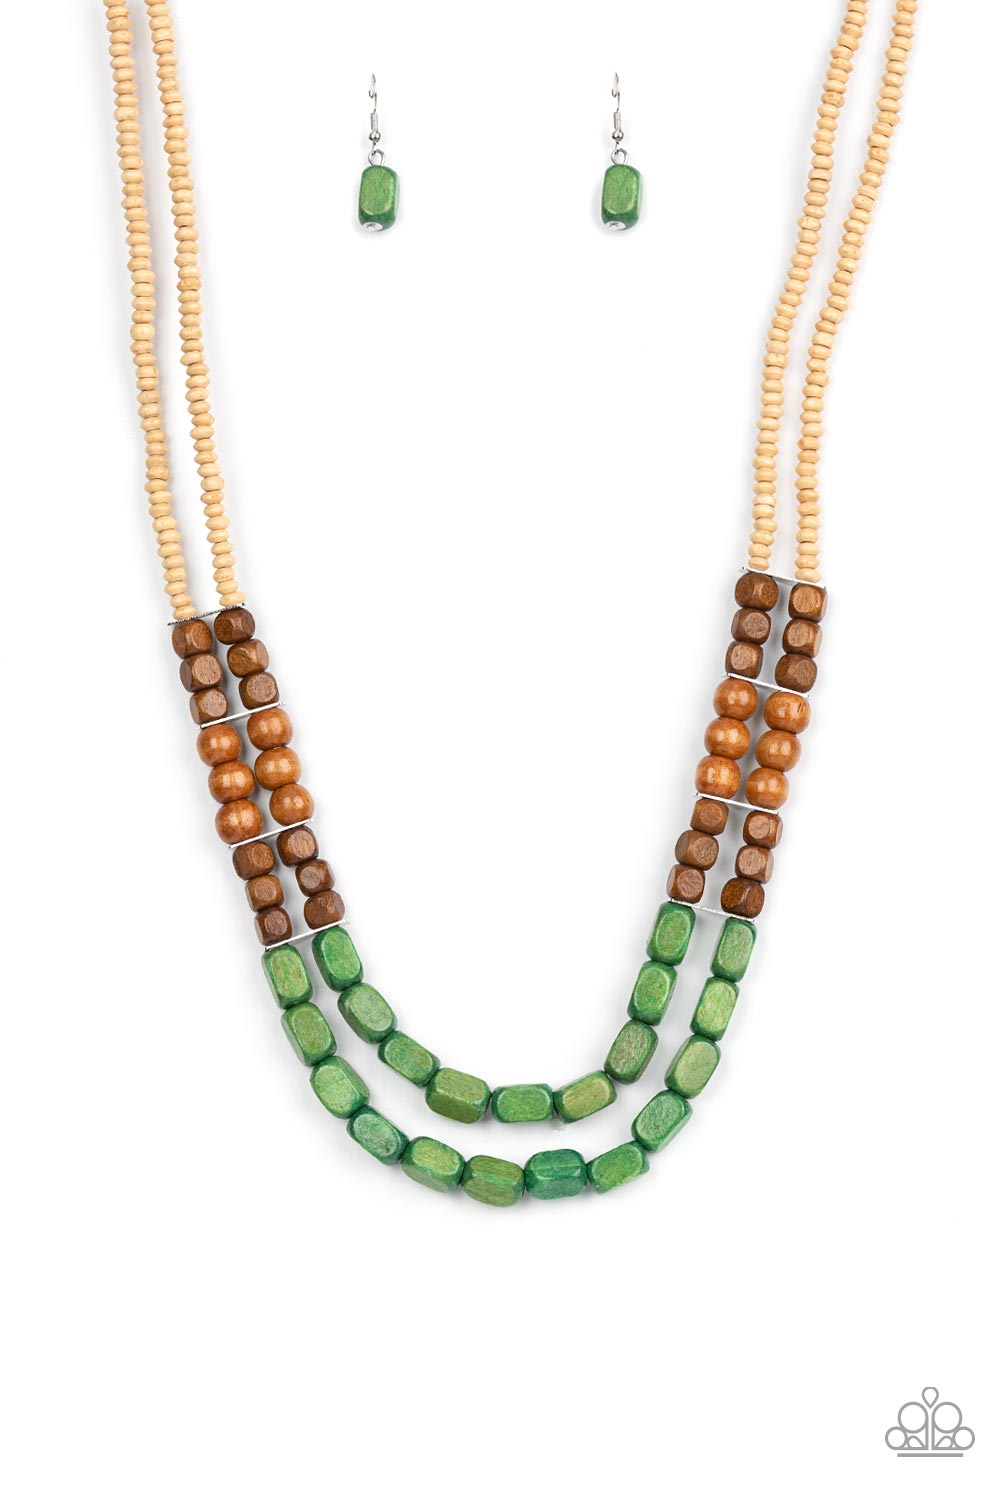 paparazzi-accessories-bermuda-bellhop-green-necklace